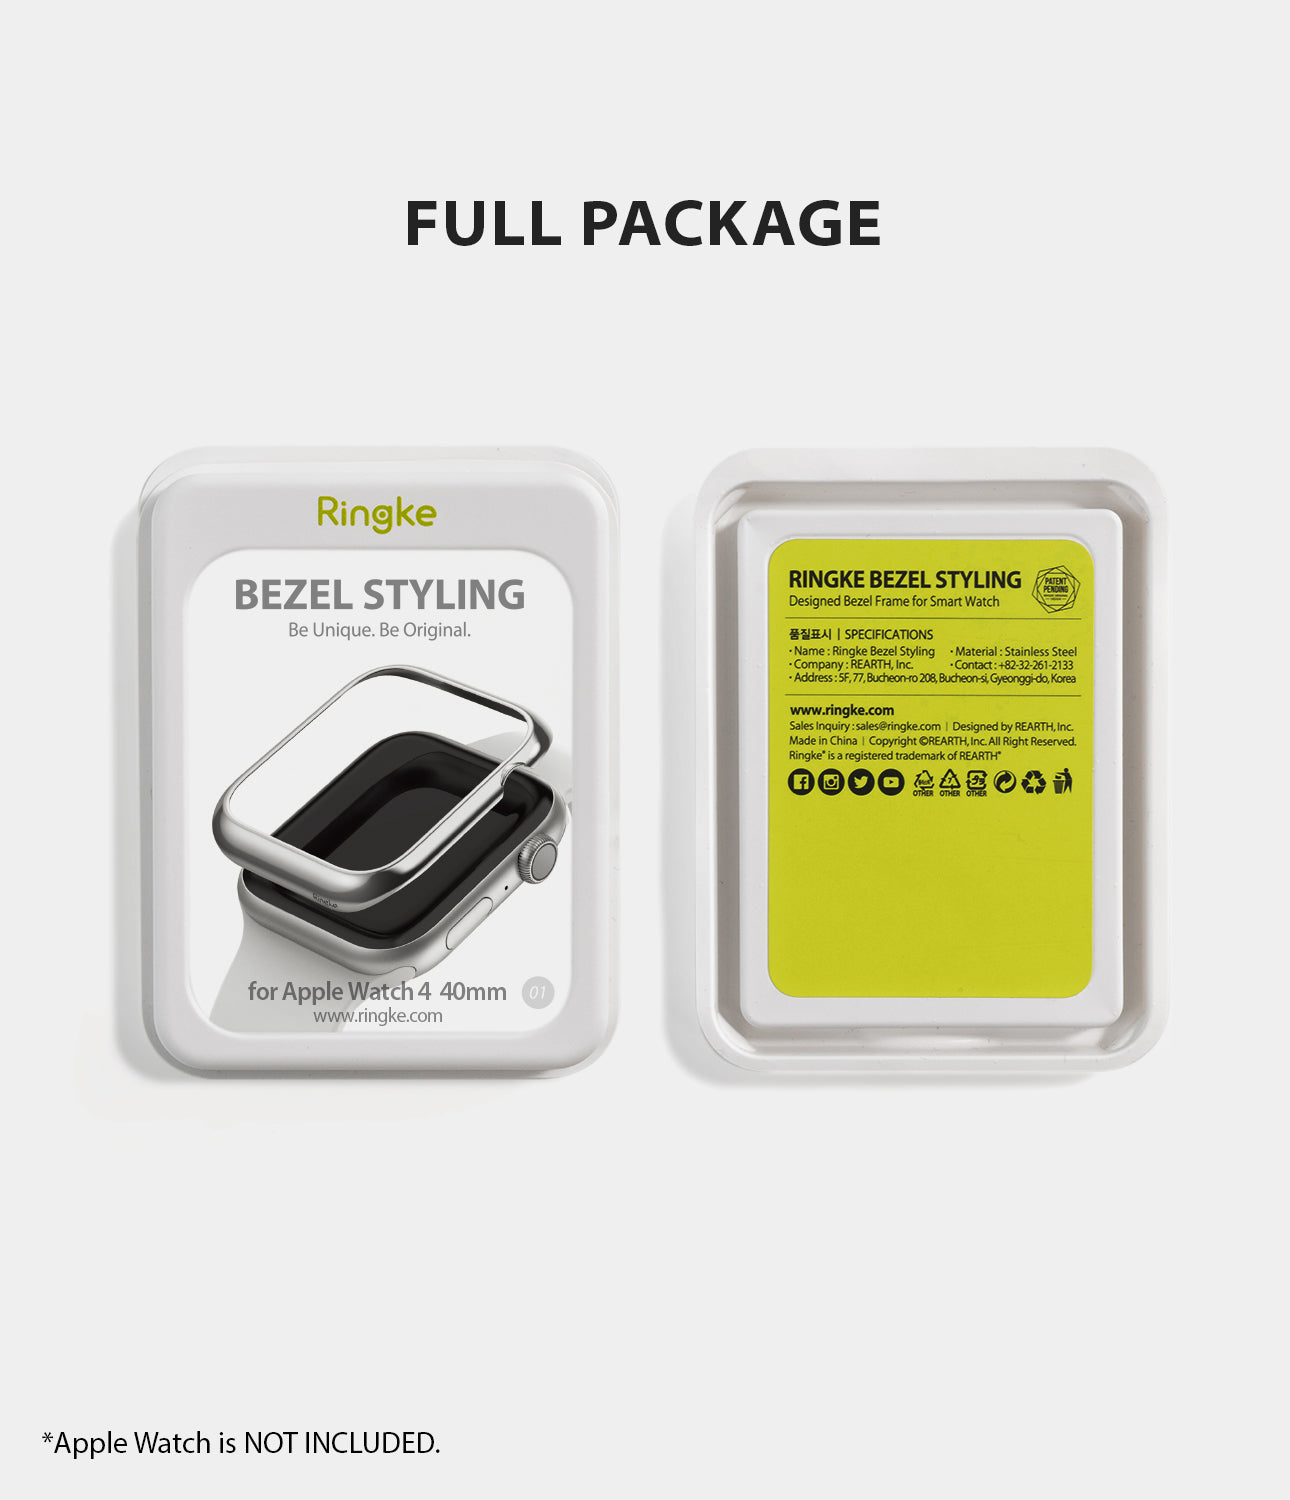 ringke bezel styling 40-01 glossy silver stainless steel on apple watch series 6 / 5 / 4 / SE 40mm full package